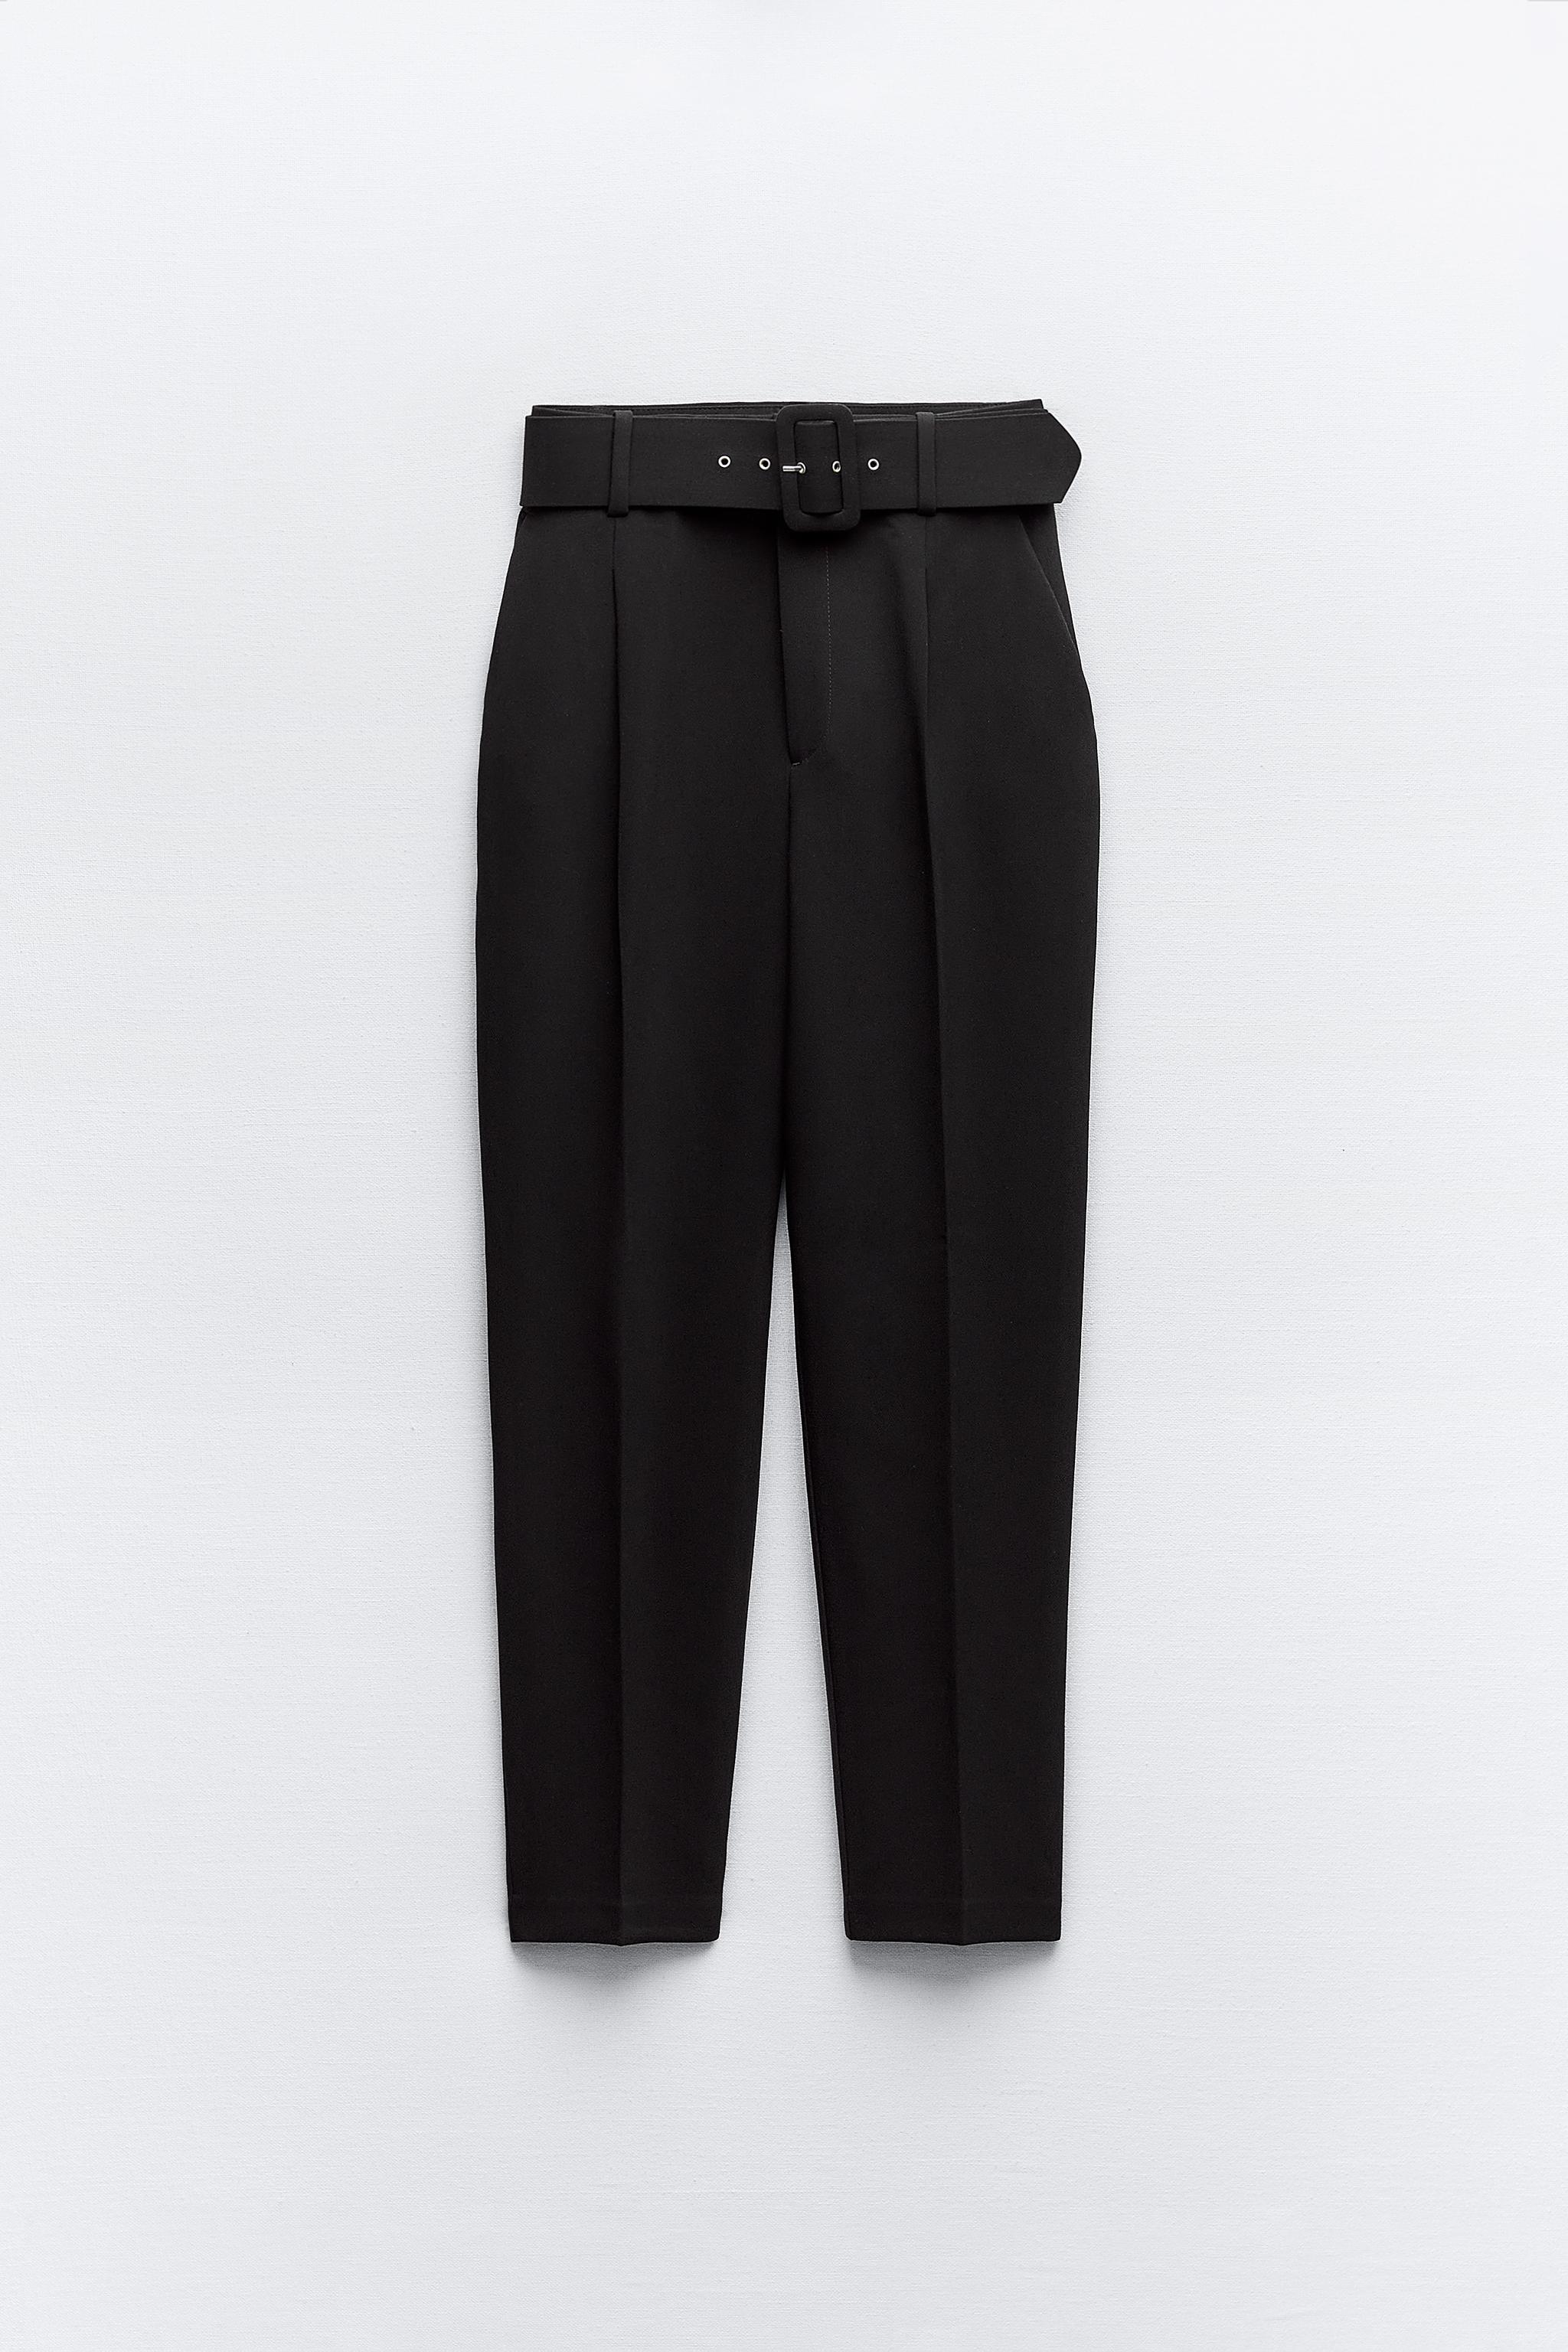 Zara Belted Pants in Black — UFO No More